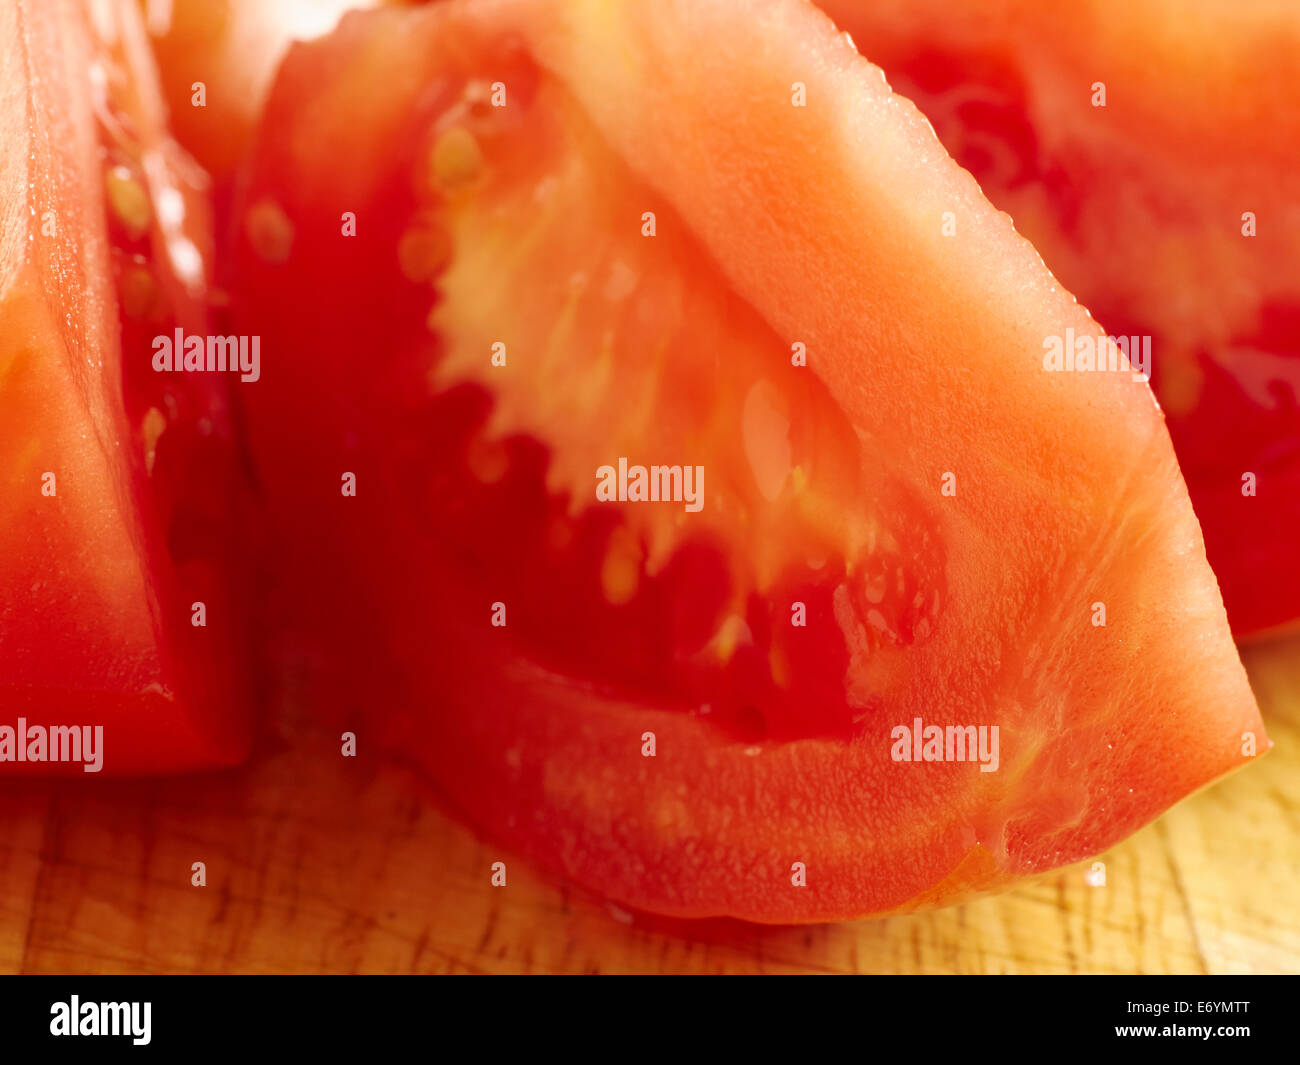 Wedges of ripe tomato Stock Photo